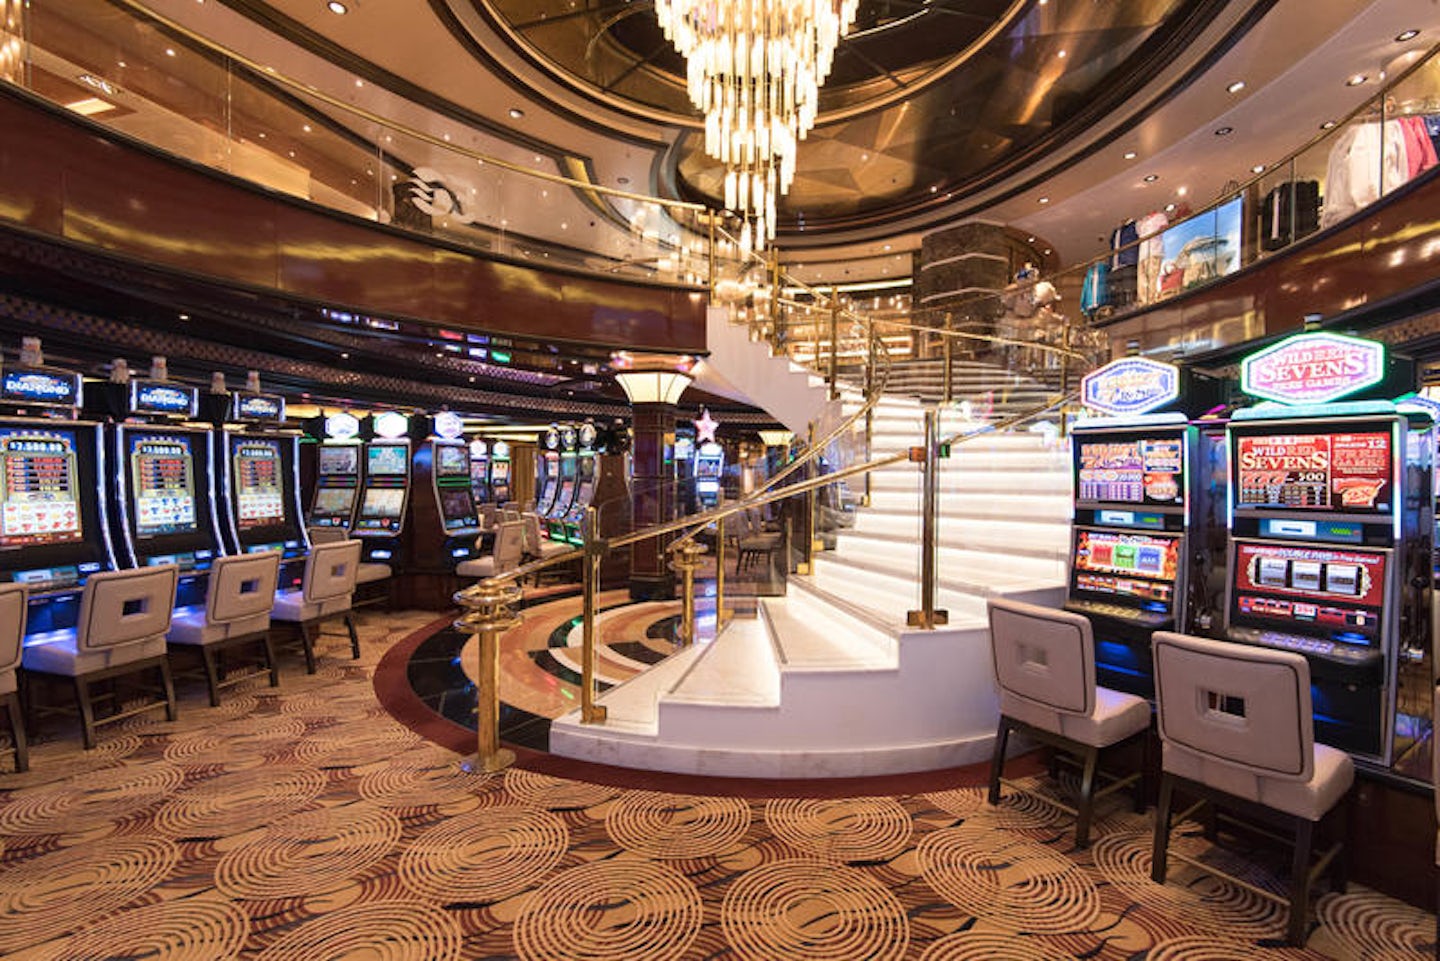 royal princess cruise casino